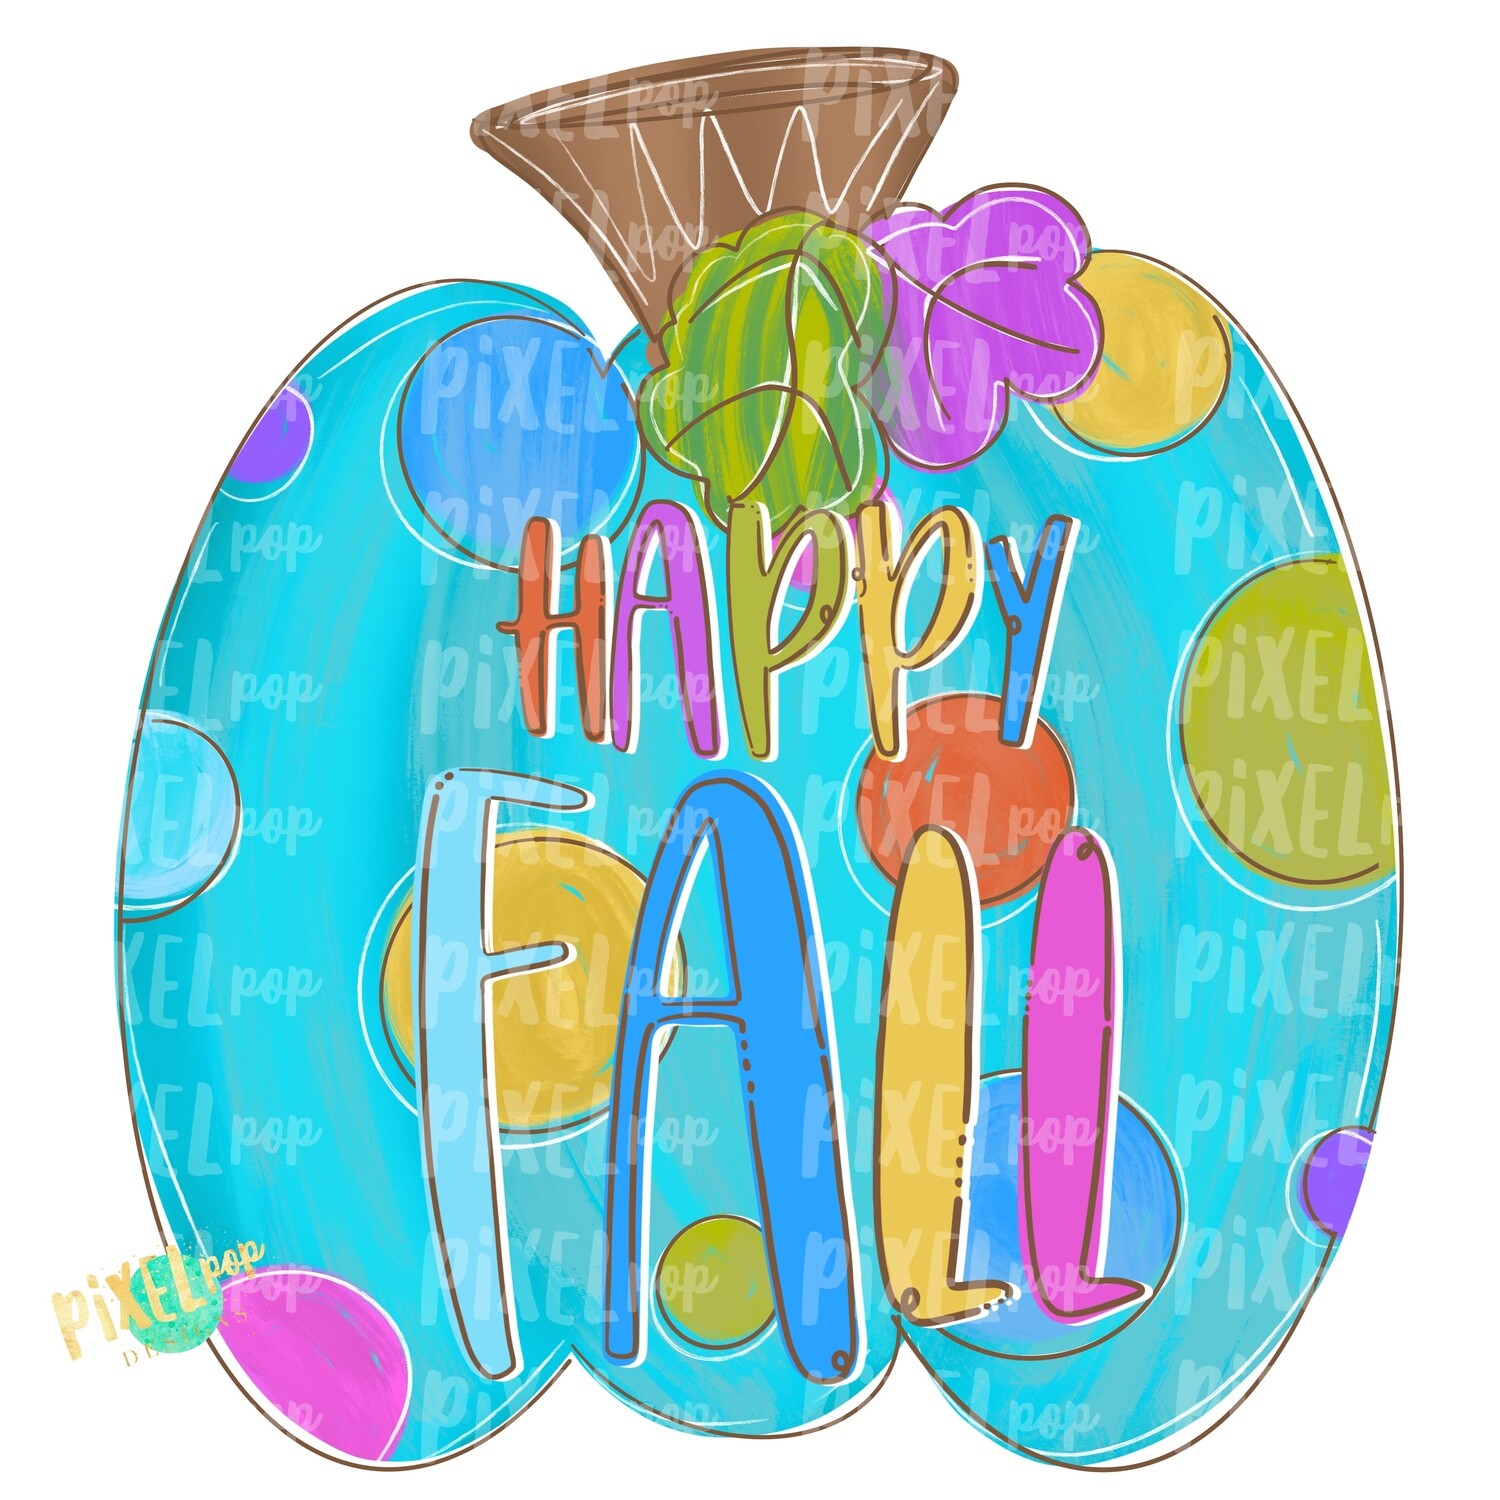 Happy Fall Colorful Polka Dot Pumpkin PNG | Halloween Design | Fall Design | Fall Art | Sublimation PNG | Digital Art | Printable Artwork